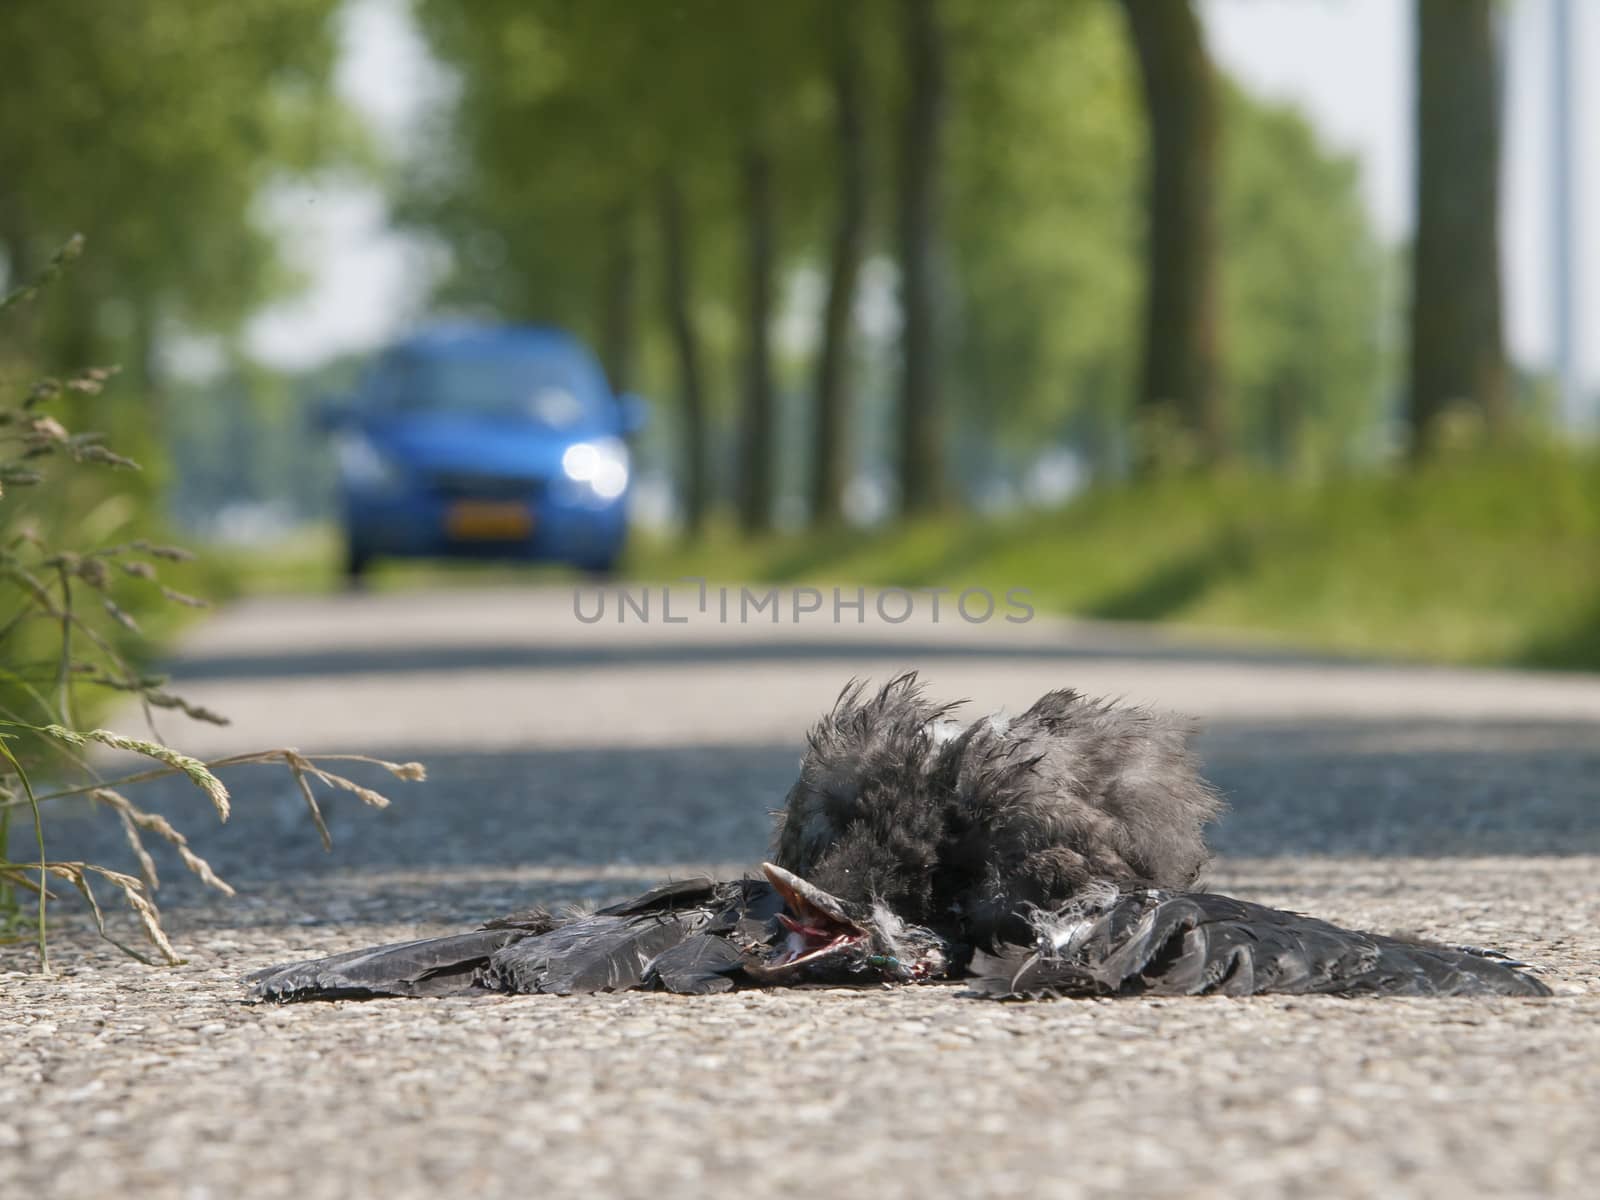 dead bird on the asphalt highway with moving car